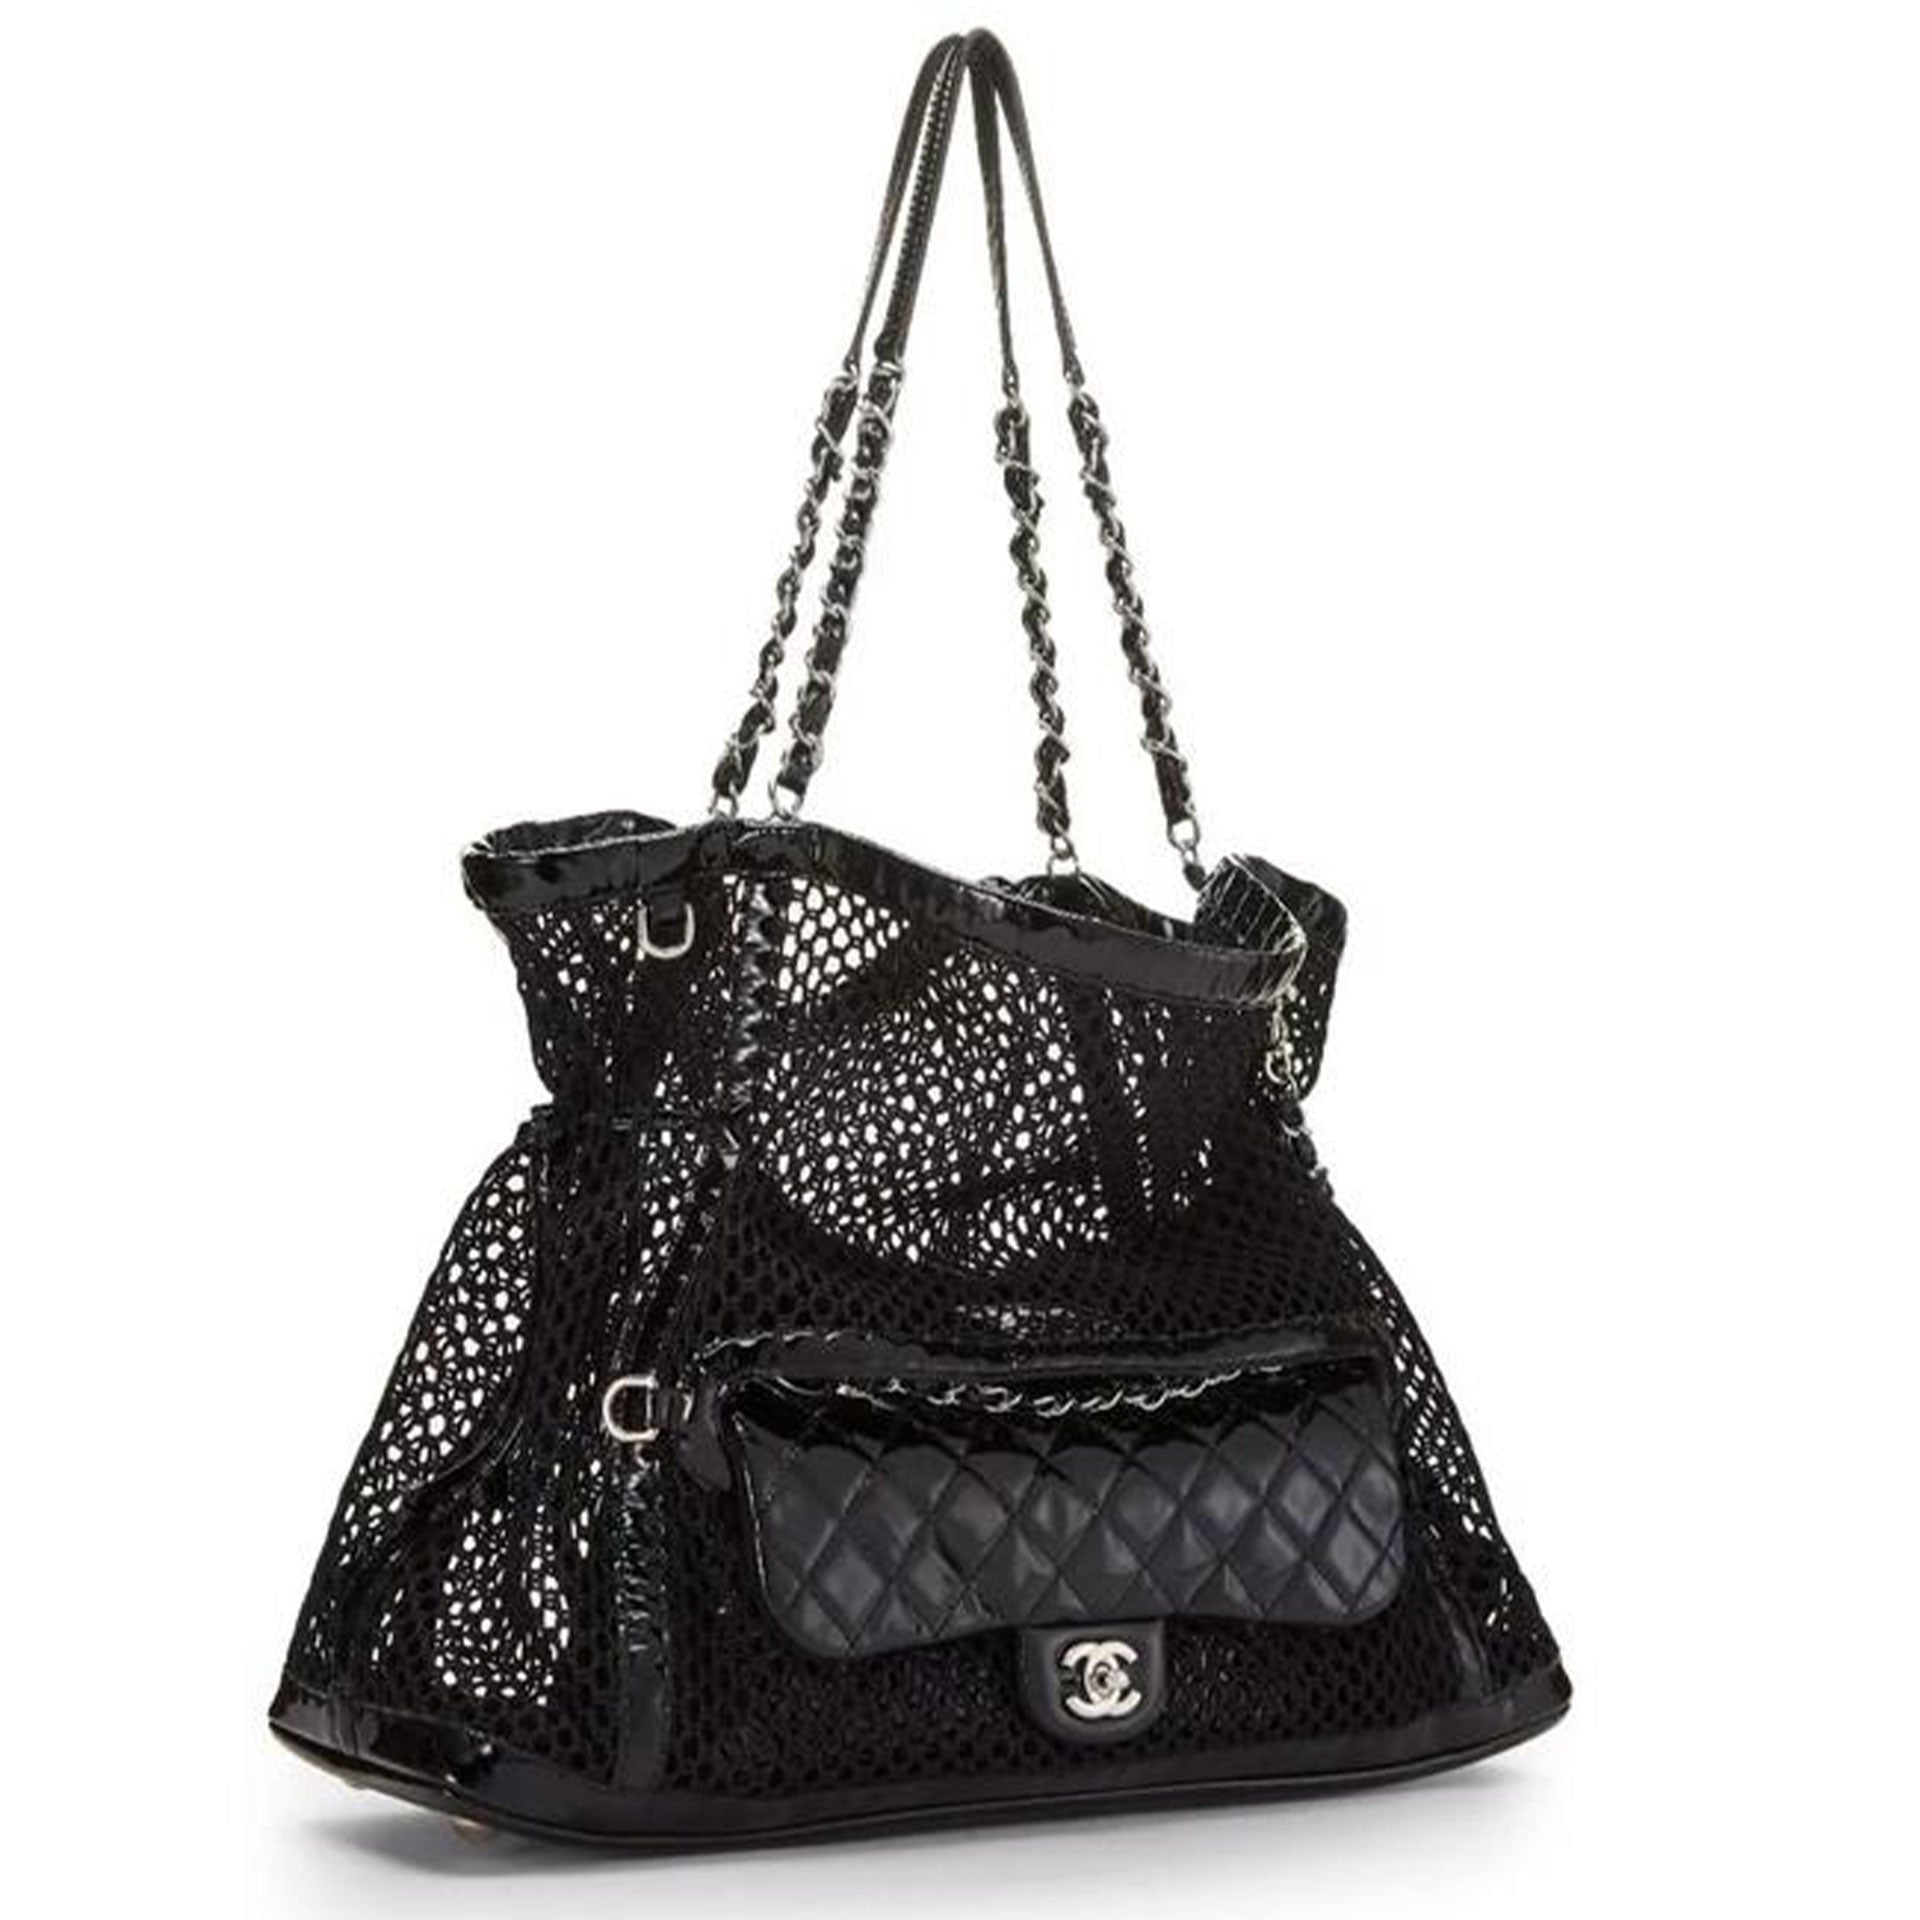 black leather chanel handbag white